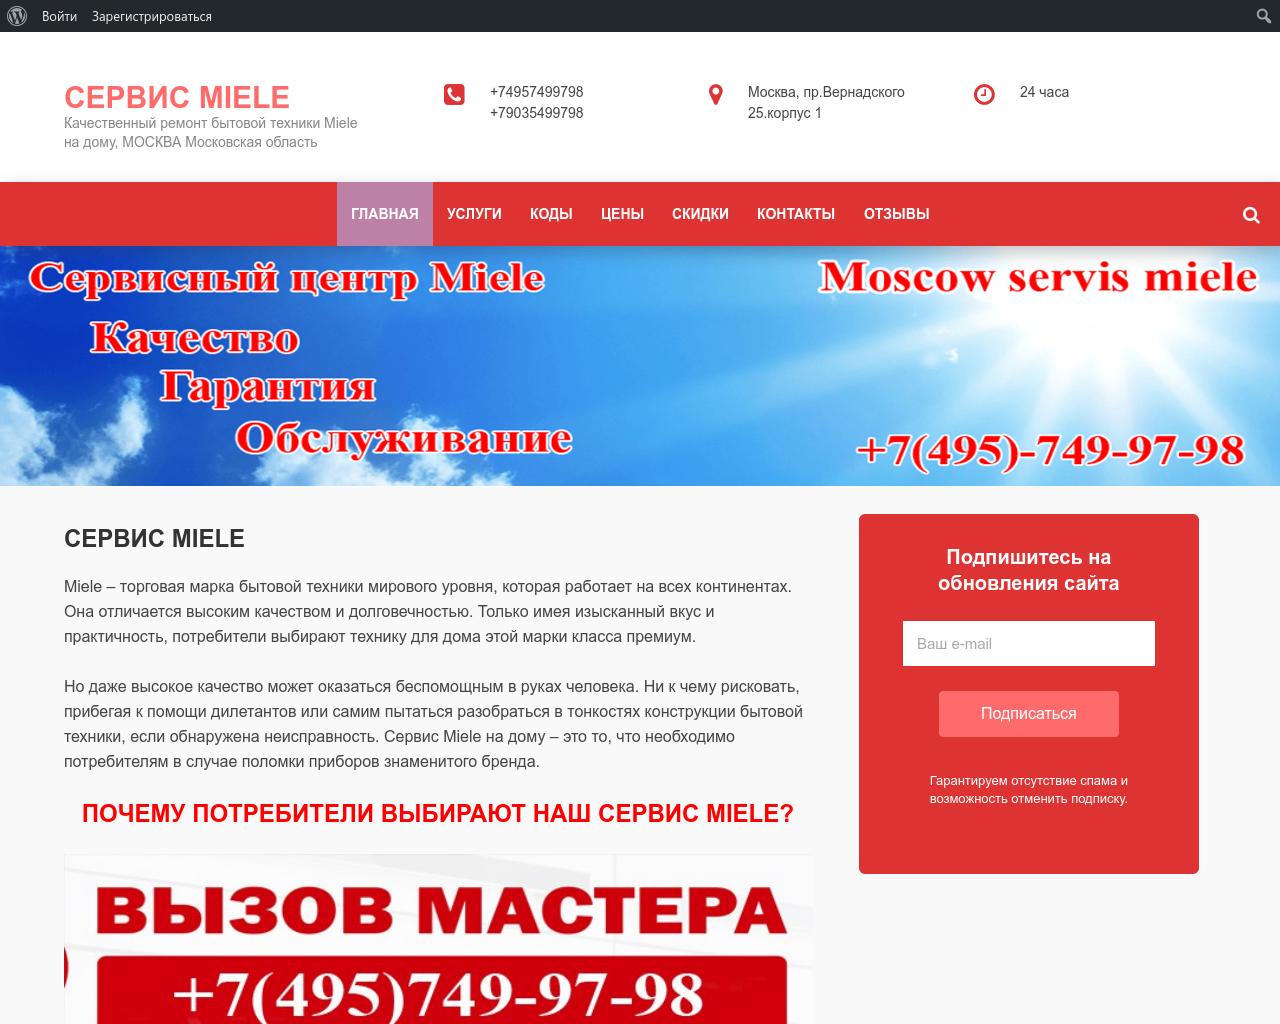 Изображение сайта moscow-servis-miele.ru в разрешении 1280x1024